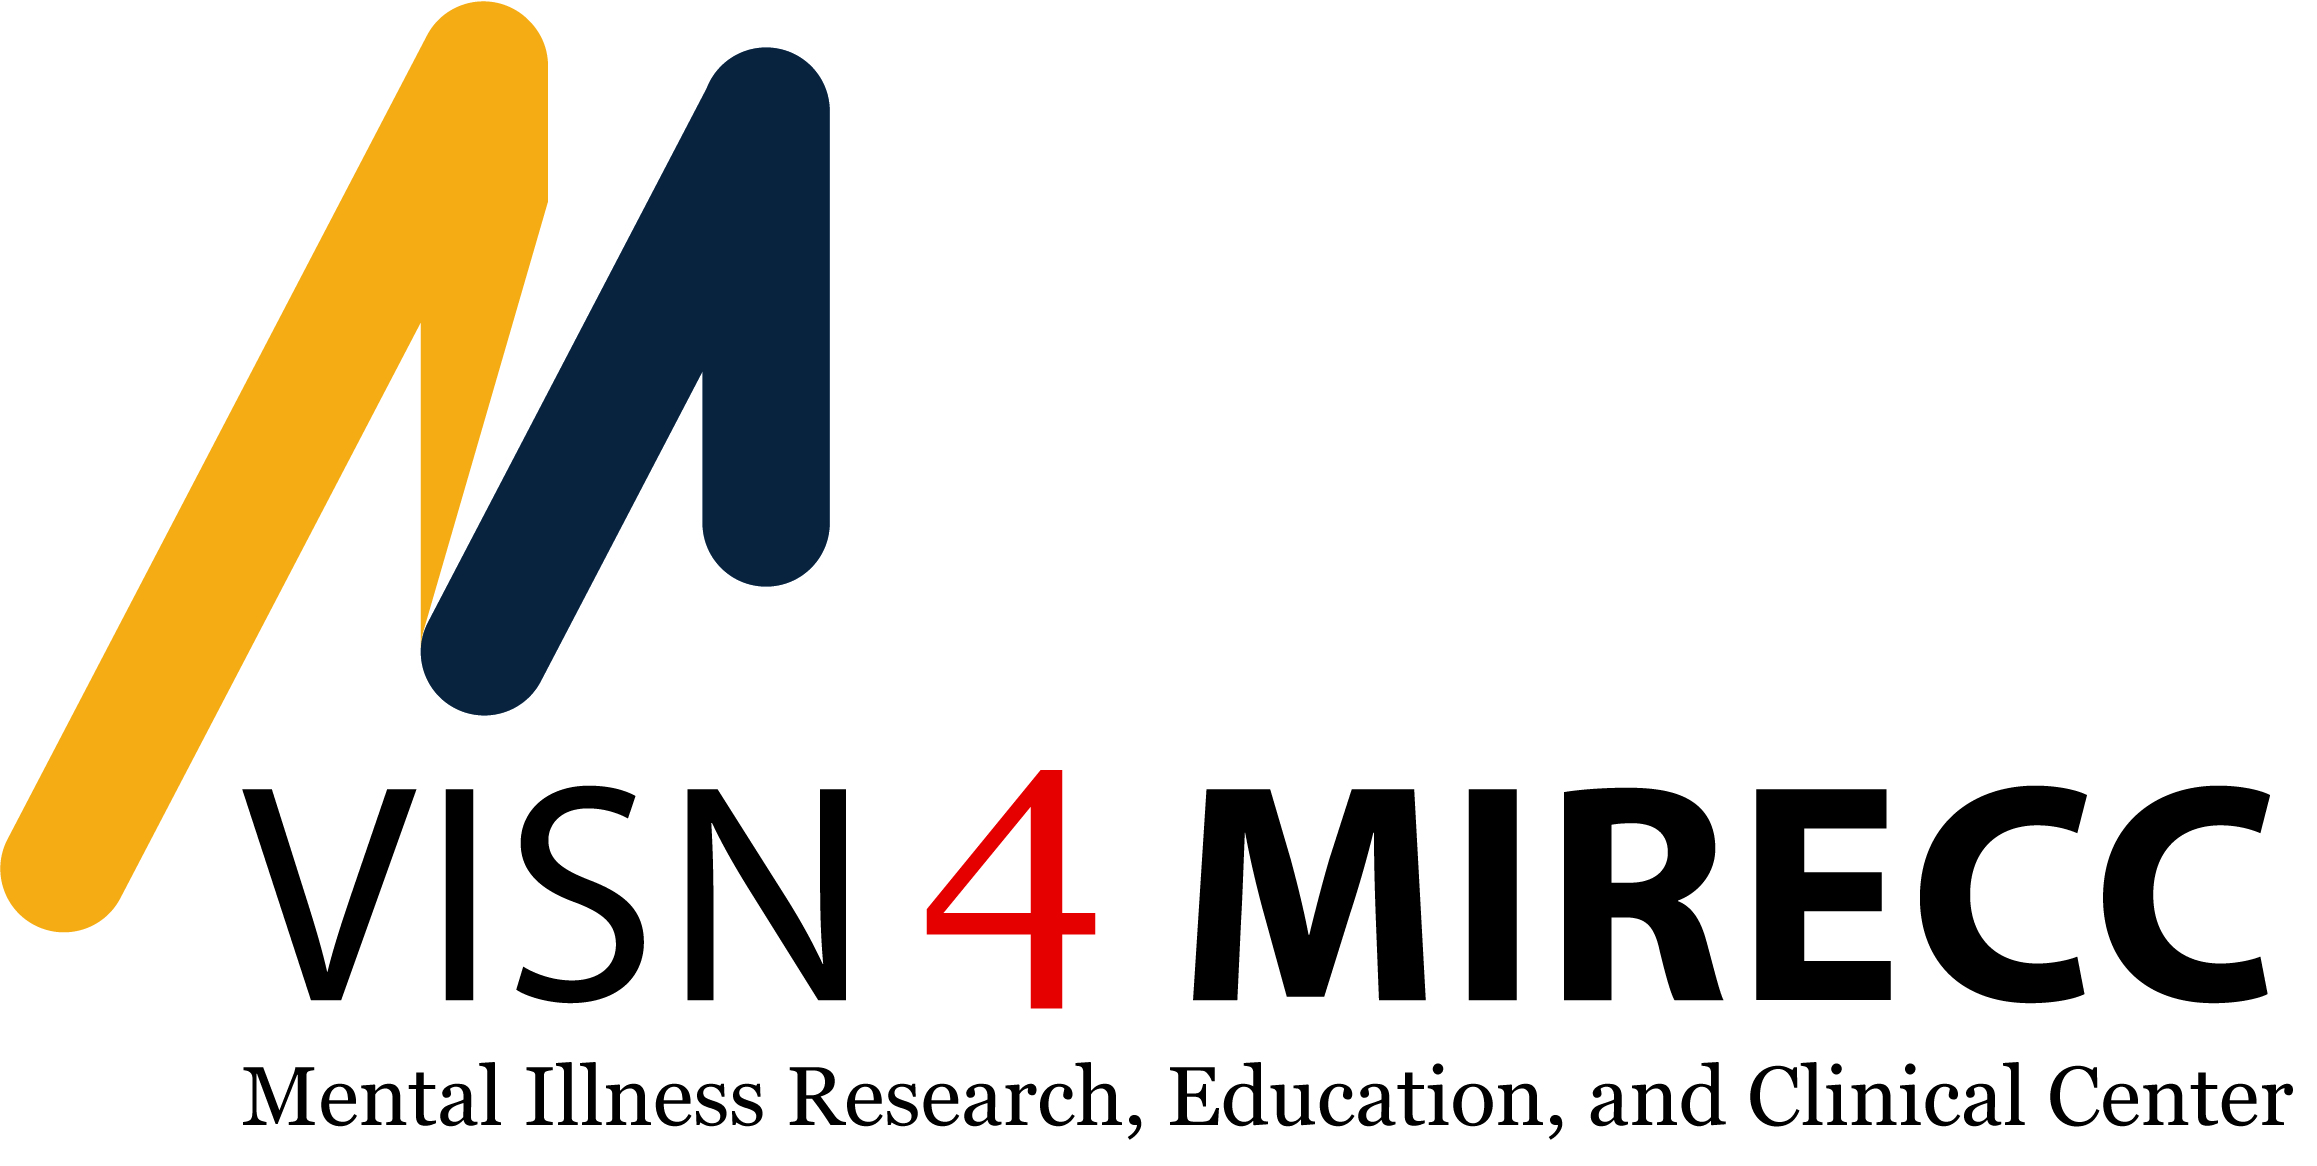 VISN 4 MIRECC logo